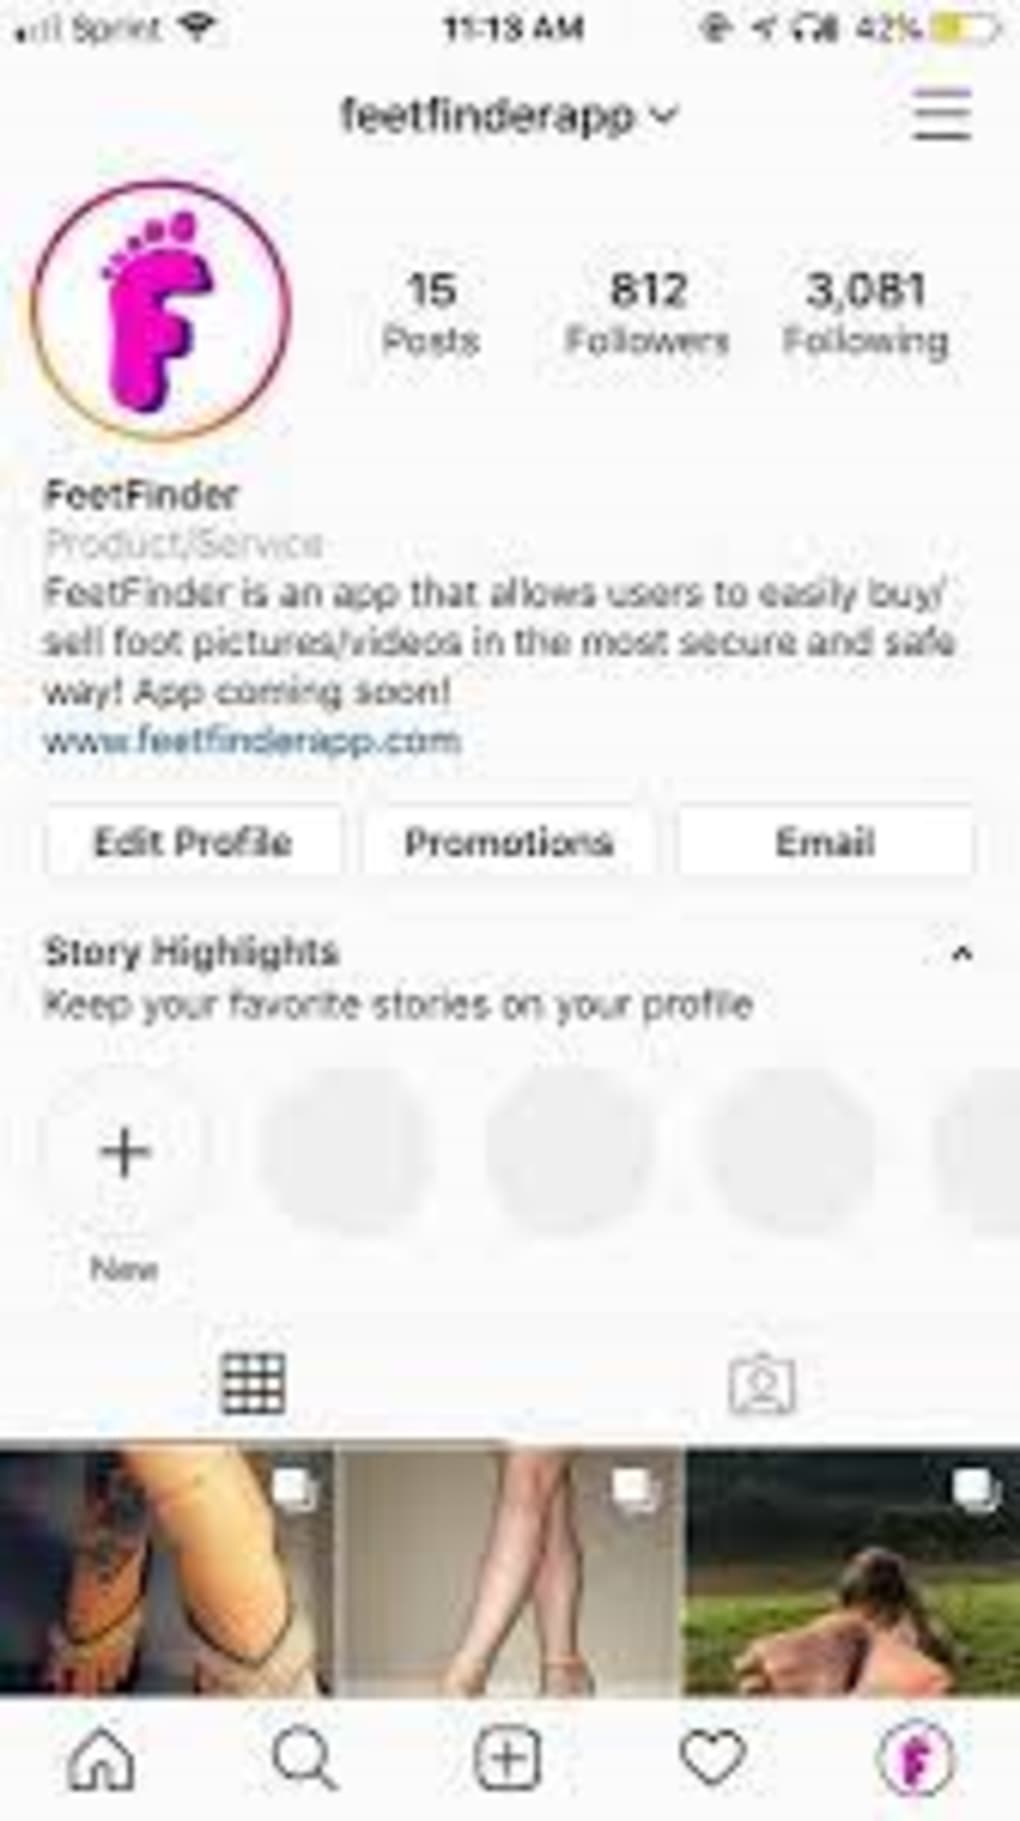 Feetfinder app download geronimo stilton full book pdf download